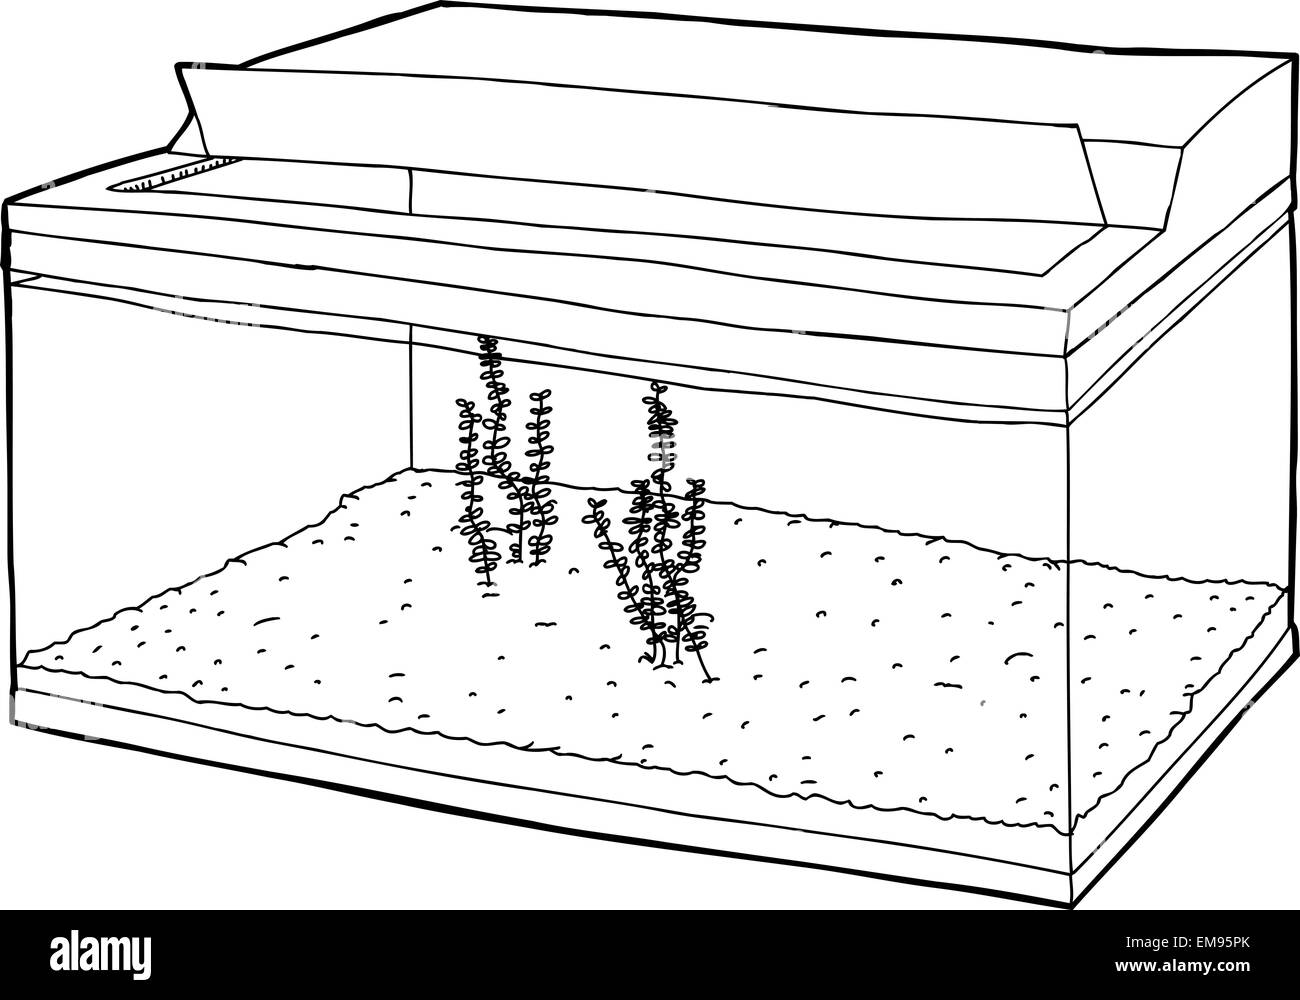 Isolated Cartoon Of Empty Aquarium Tank With Aquatic Plants Royalty ...